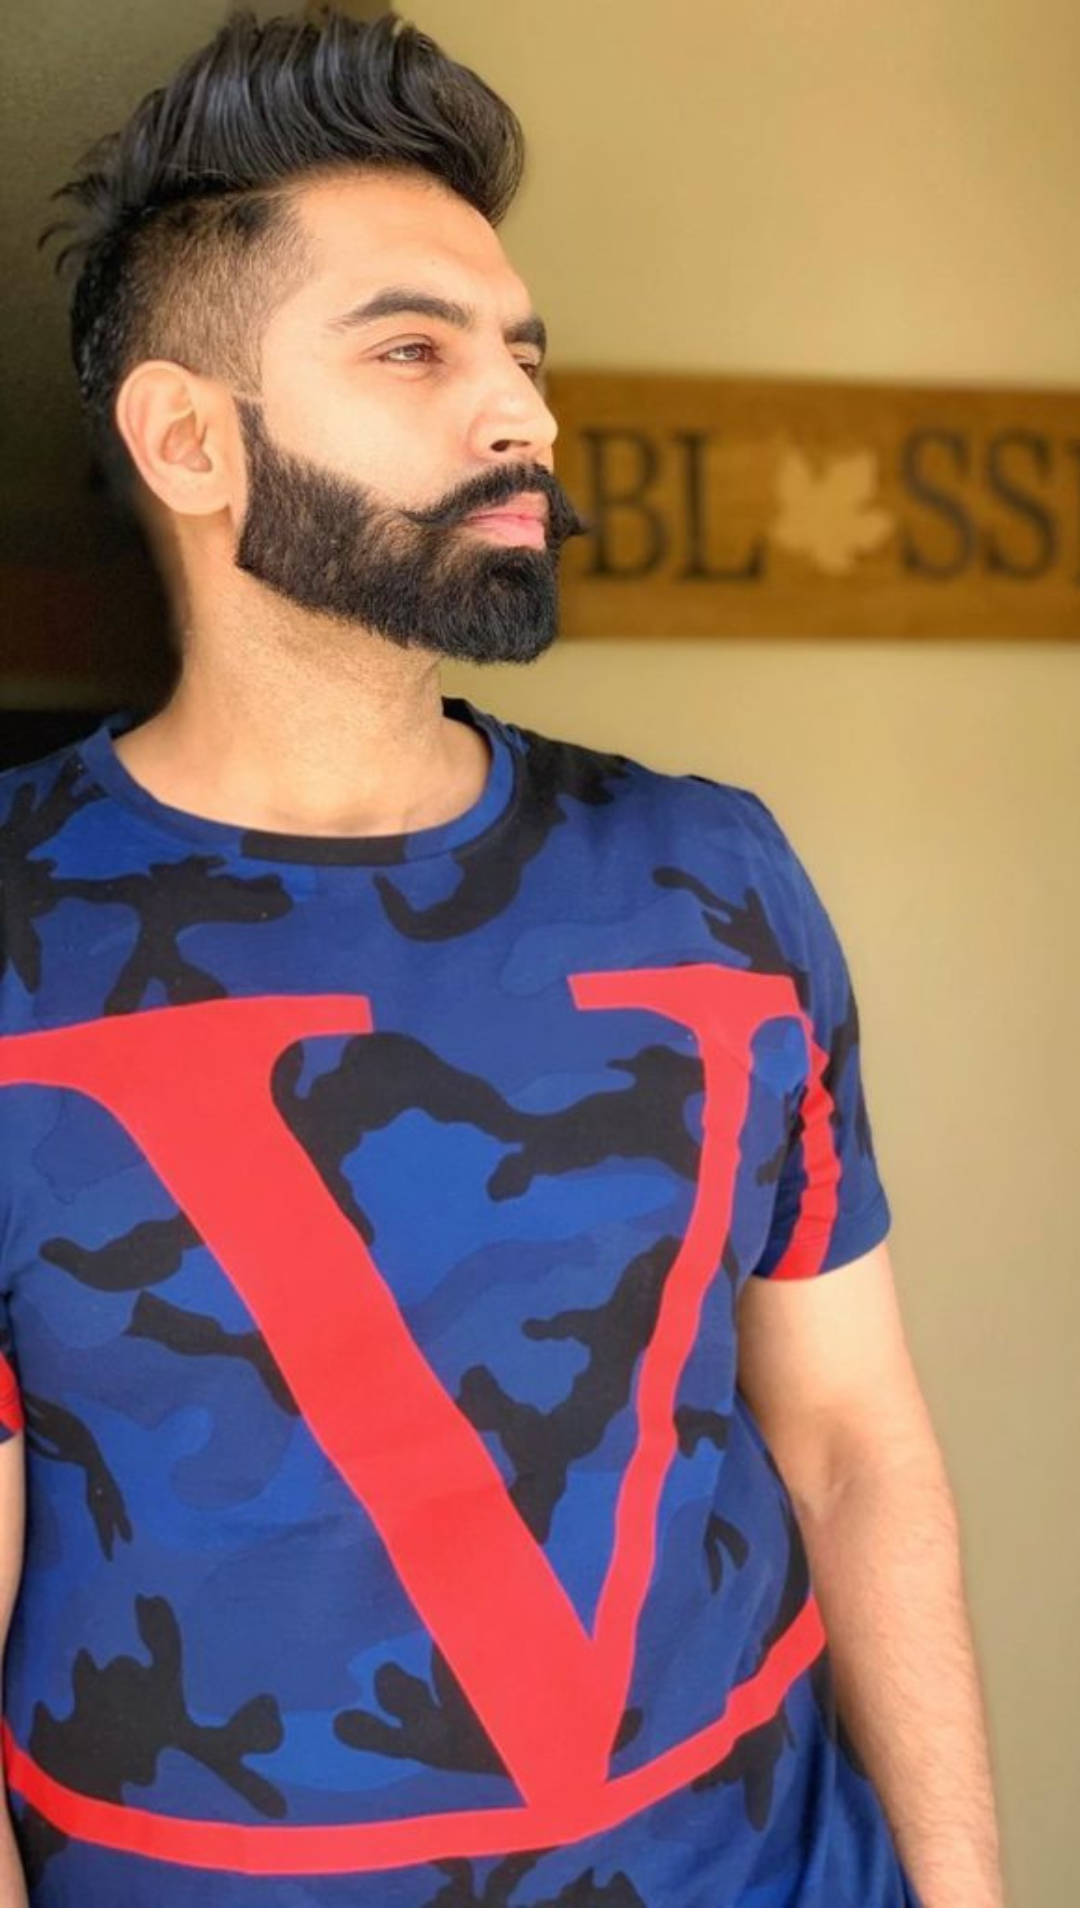 Beard like parmish Verma | beard n hairstyles - YouTube